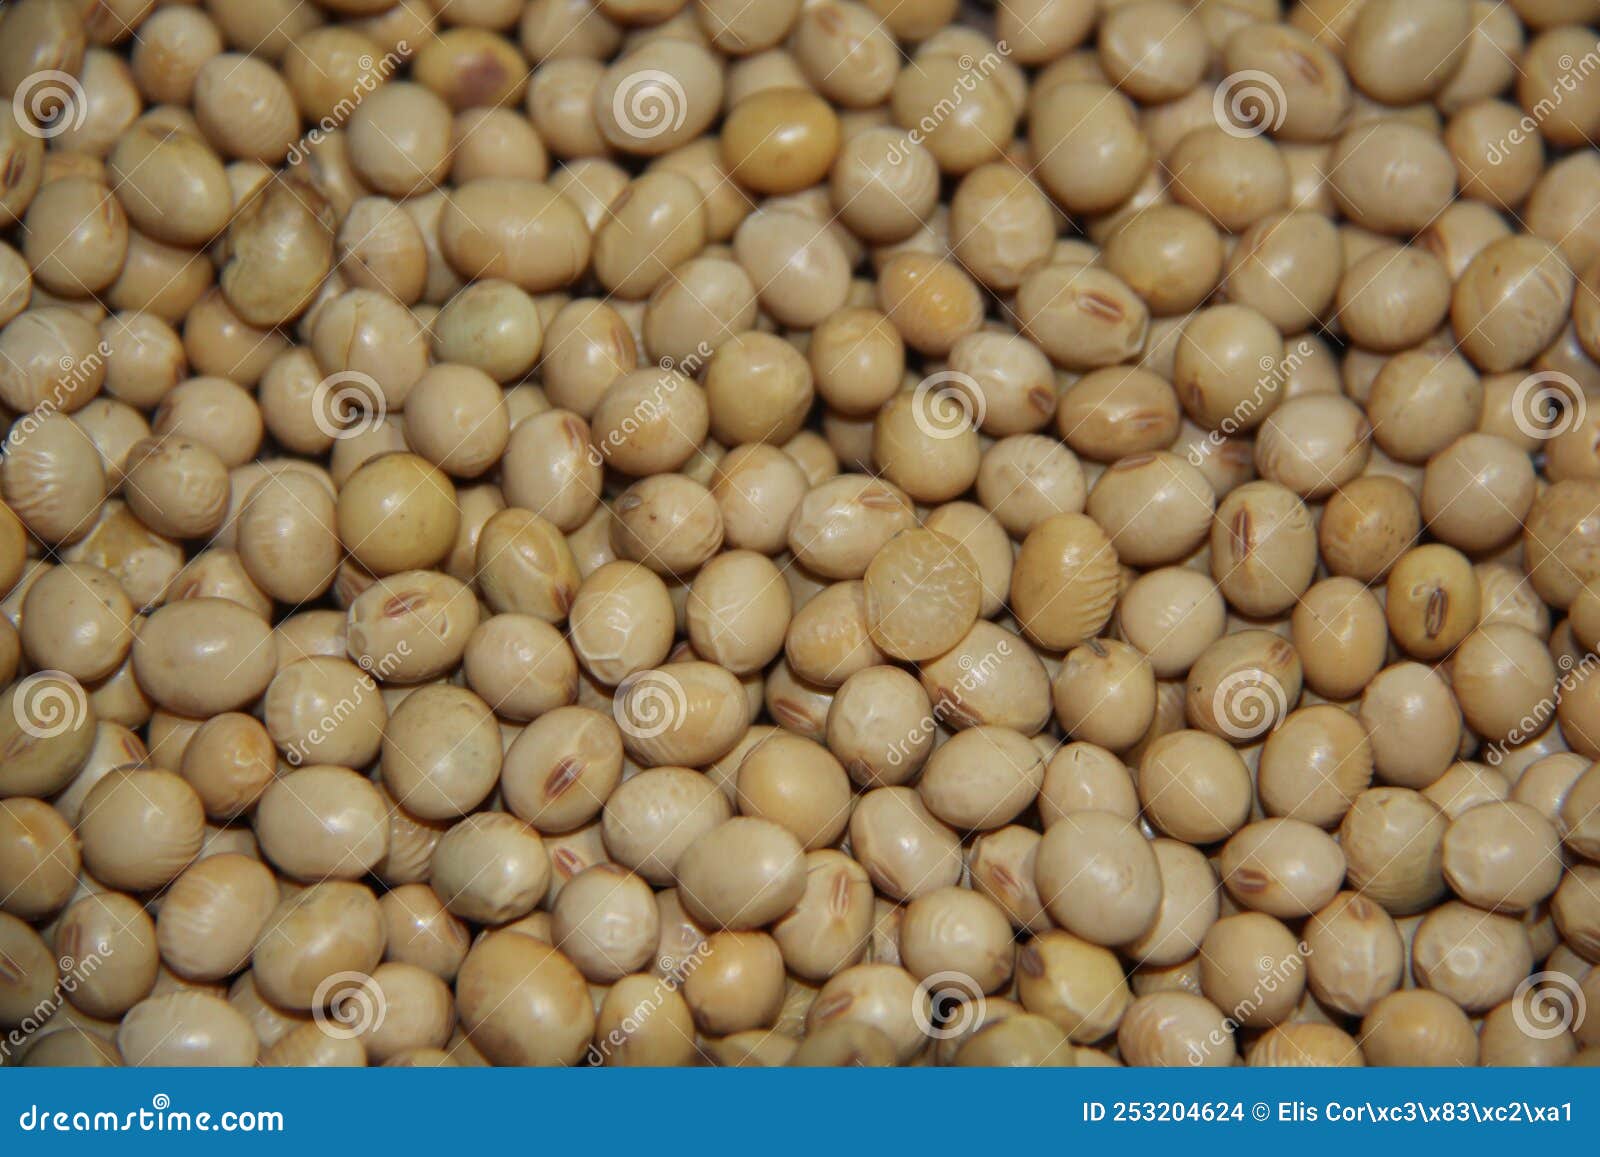 full frame of soy beans (glycine max). organic and fresh